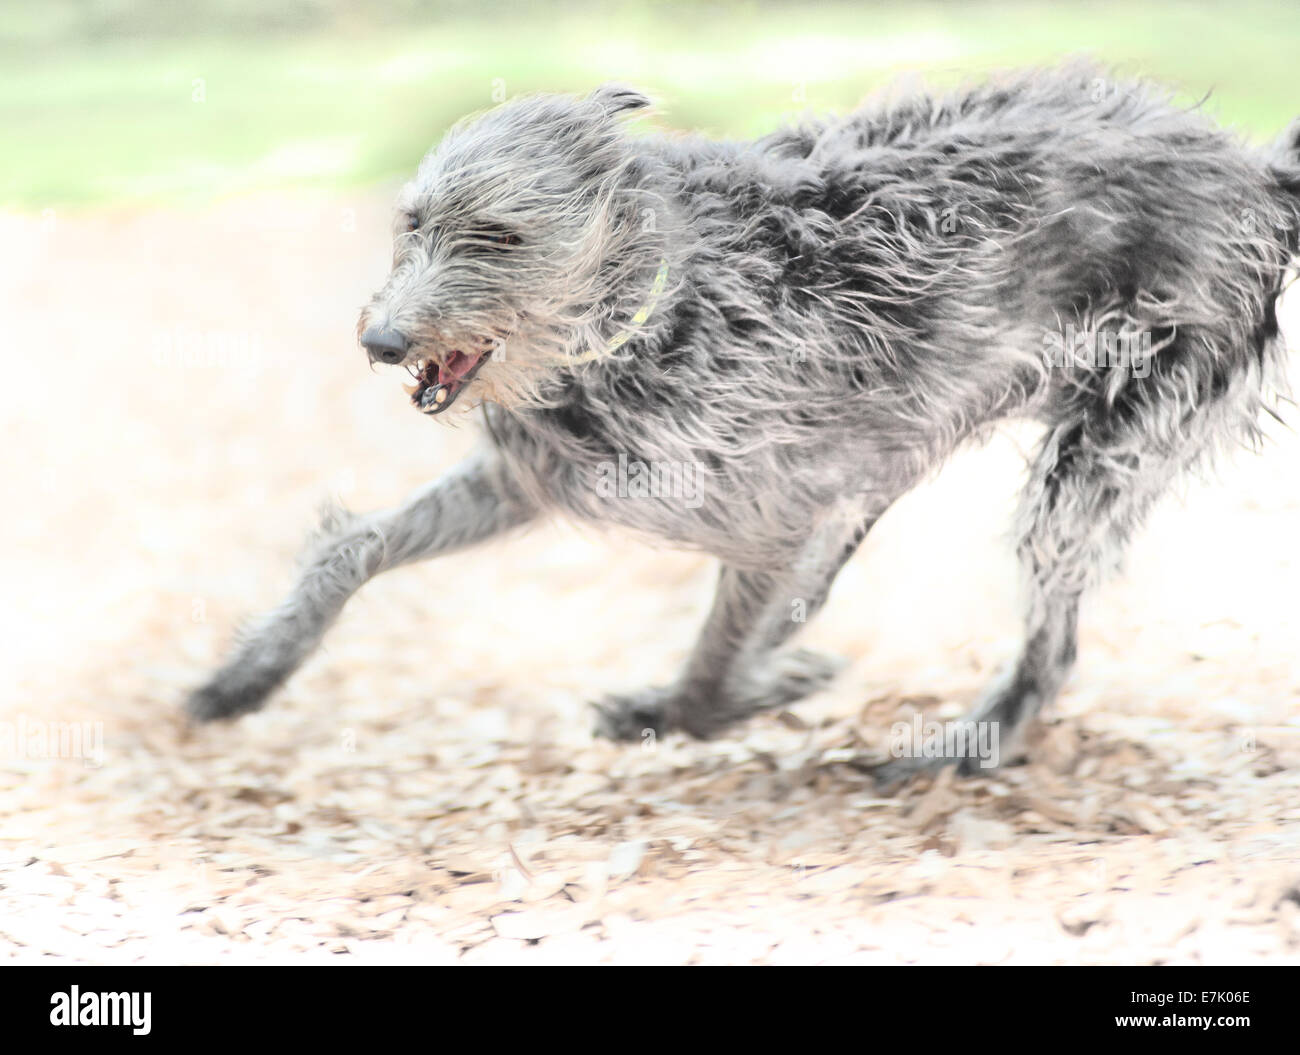 Digital photo art of Lurcher dog running Stock Photo